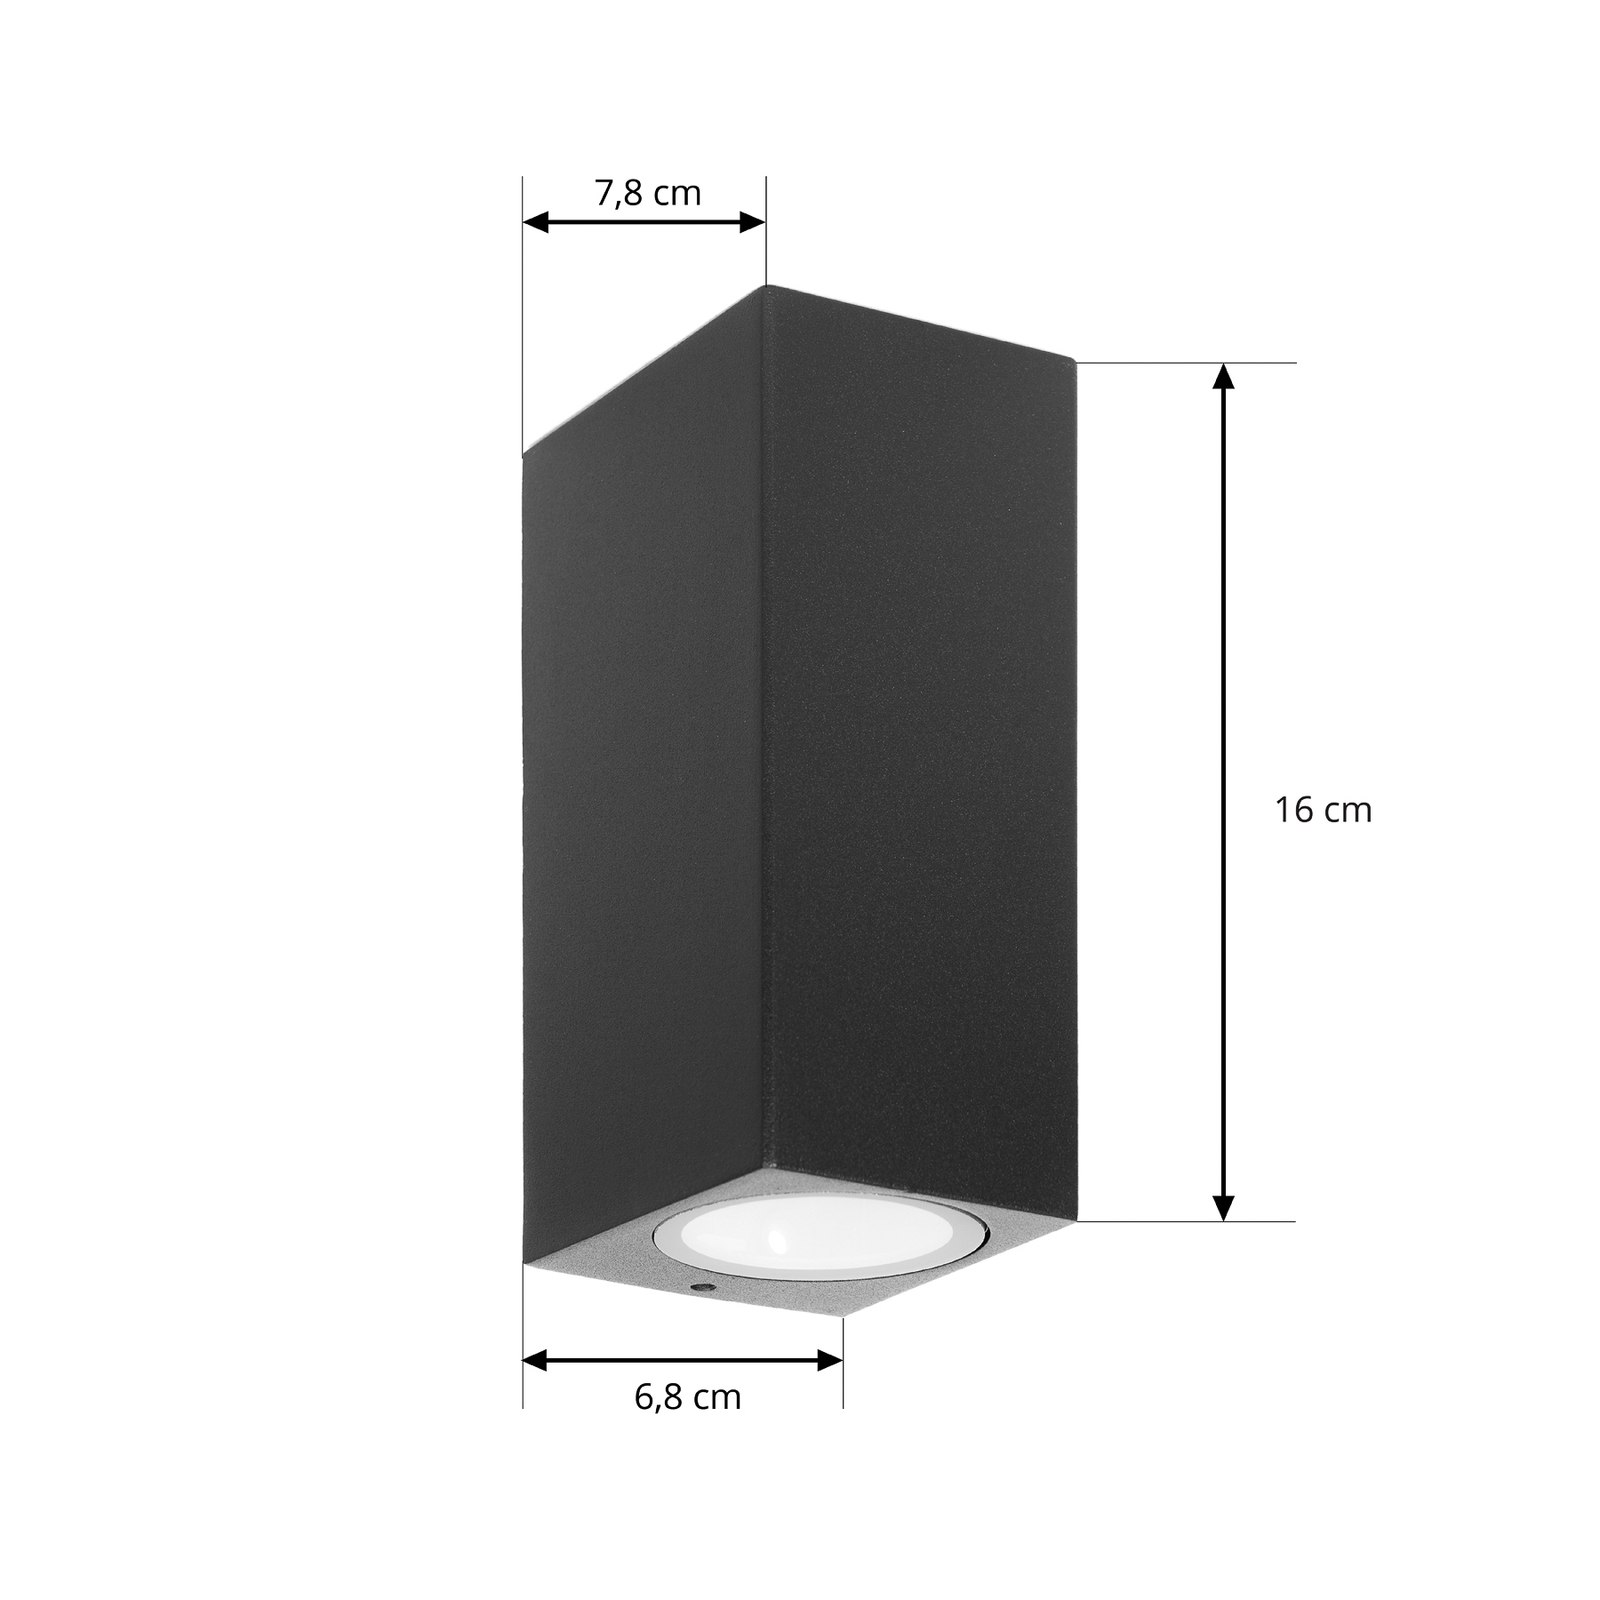 Prios outdoor wall light Tetje, black, angular, 16 cm, set of 4